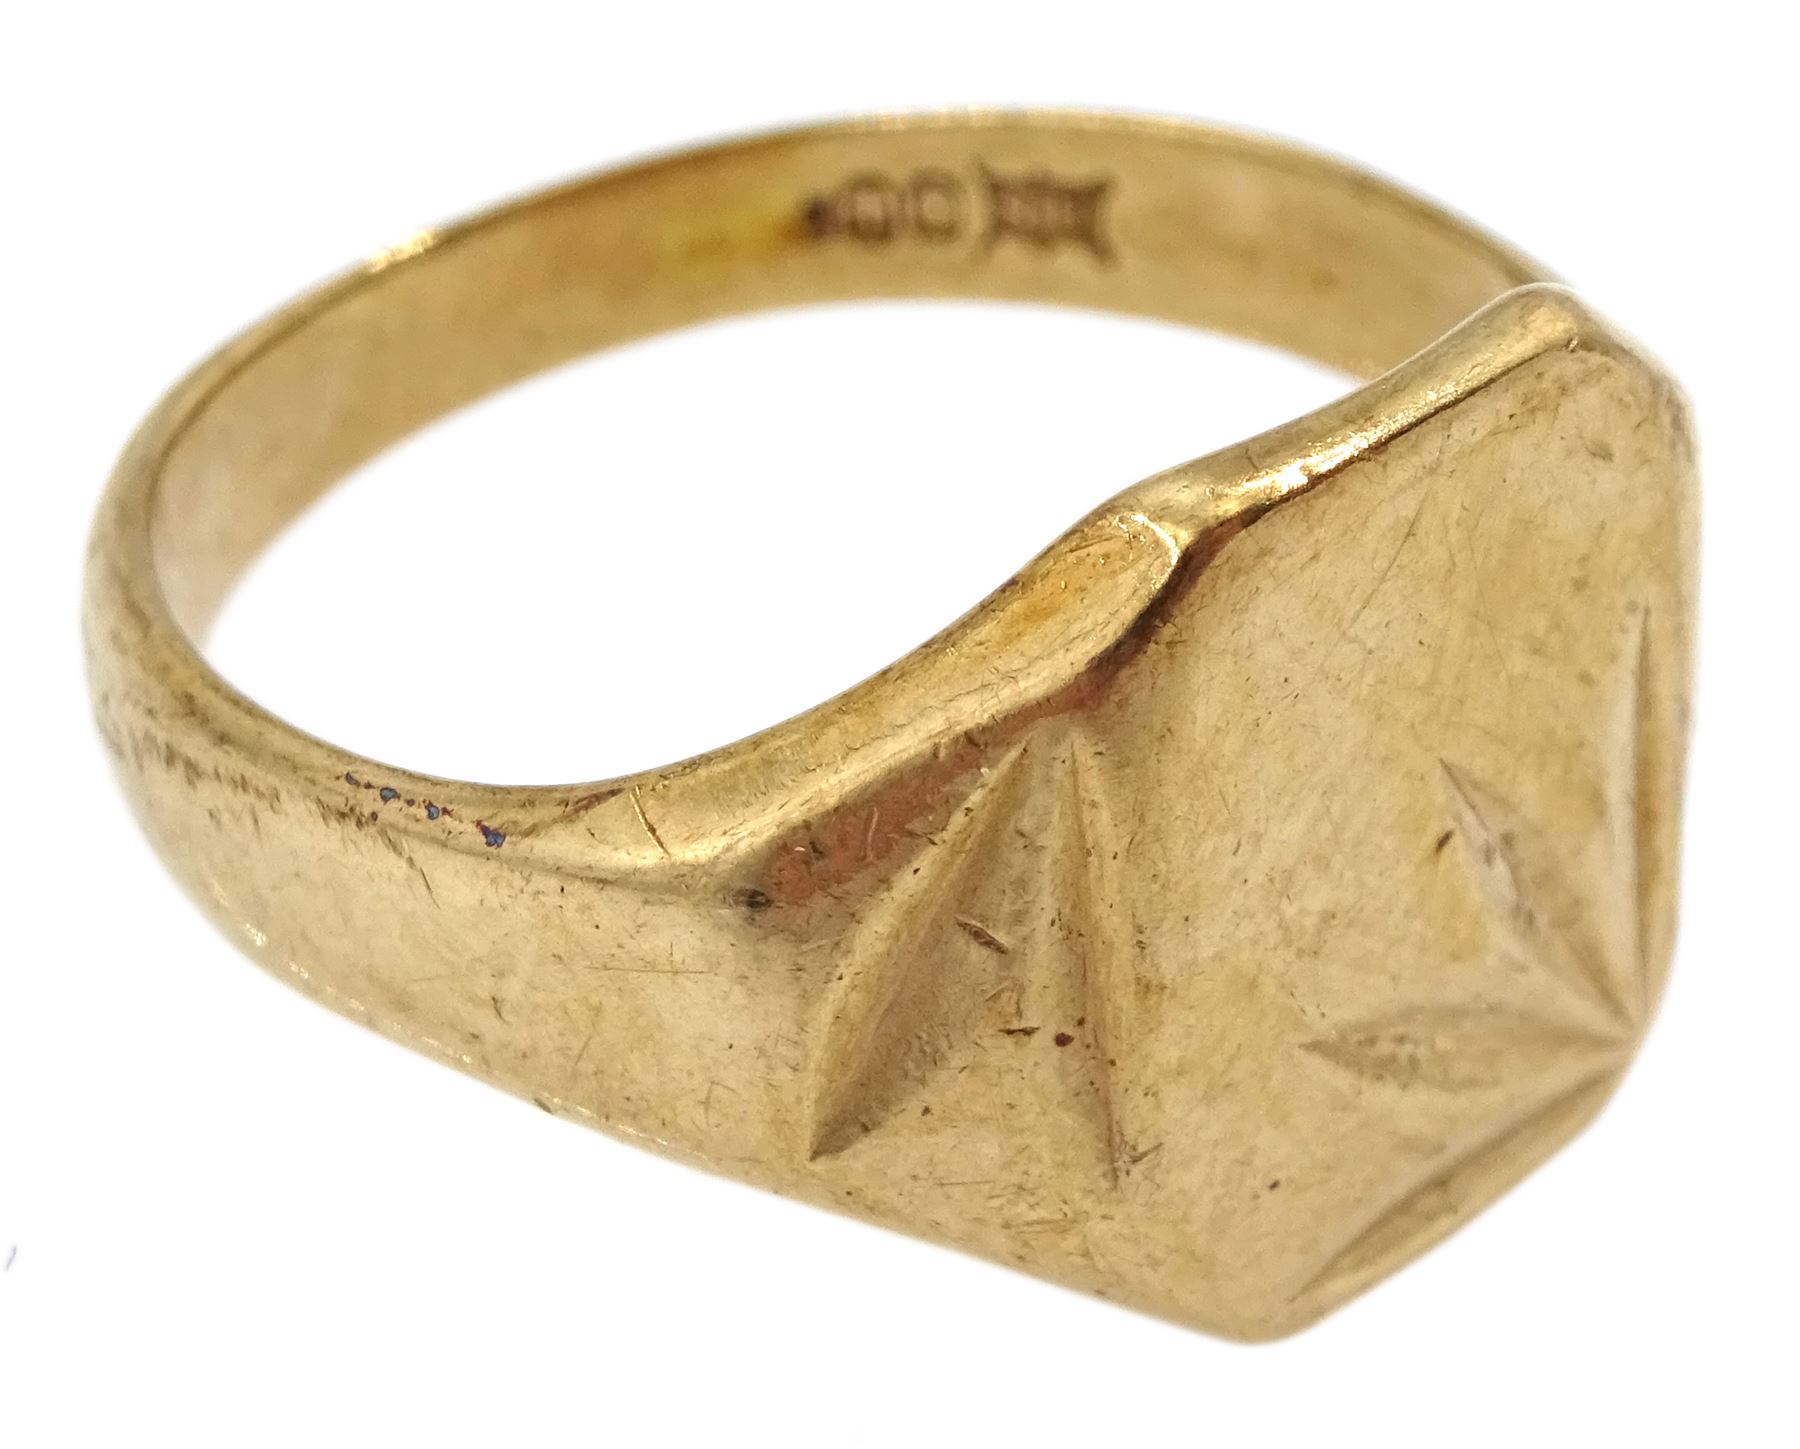 9ct gold signet ring - Image 3 of 4